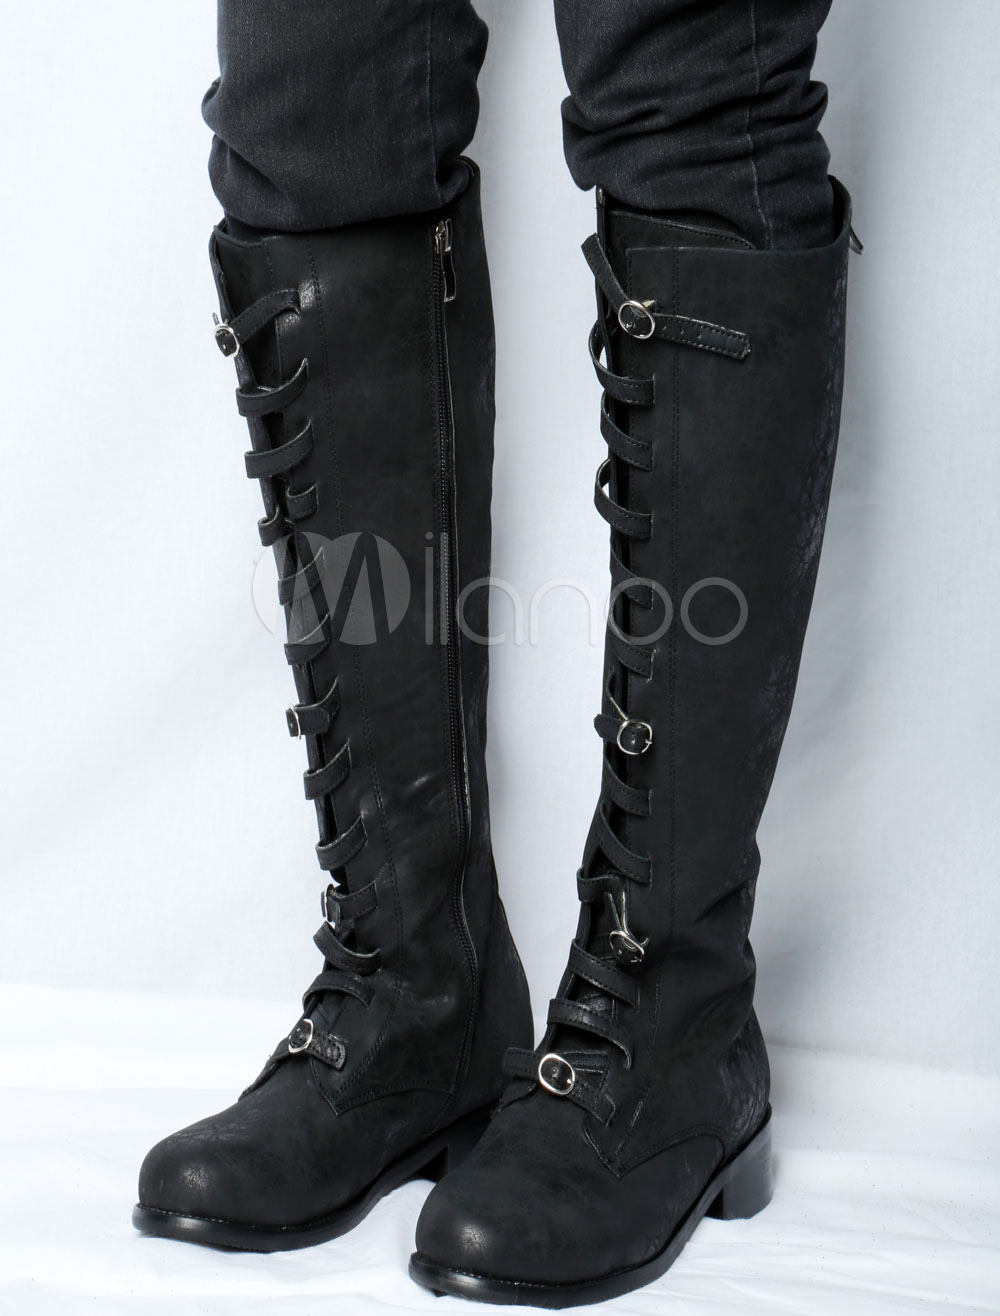 black knee high biker boots